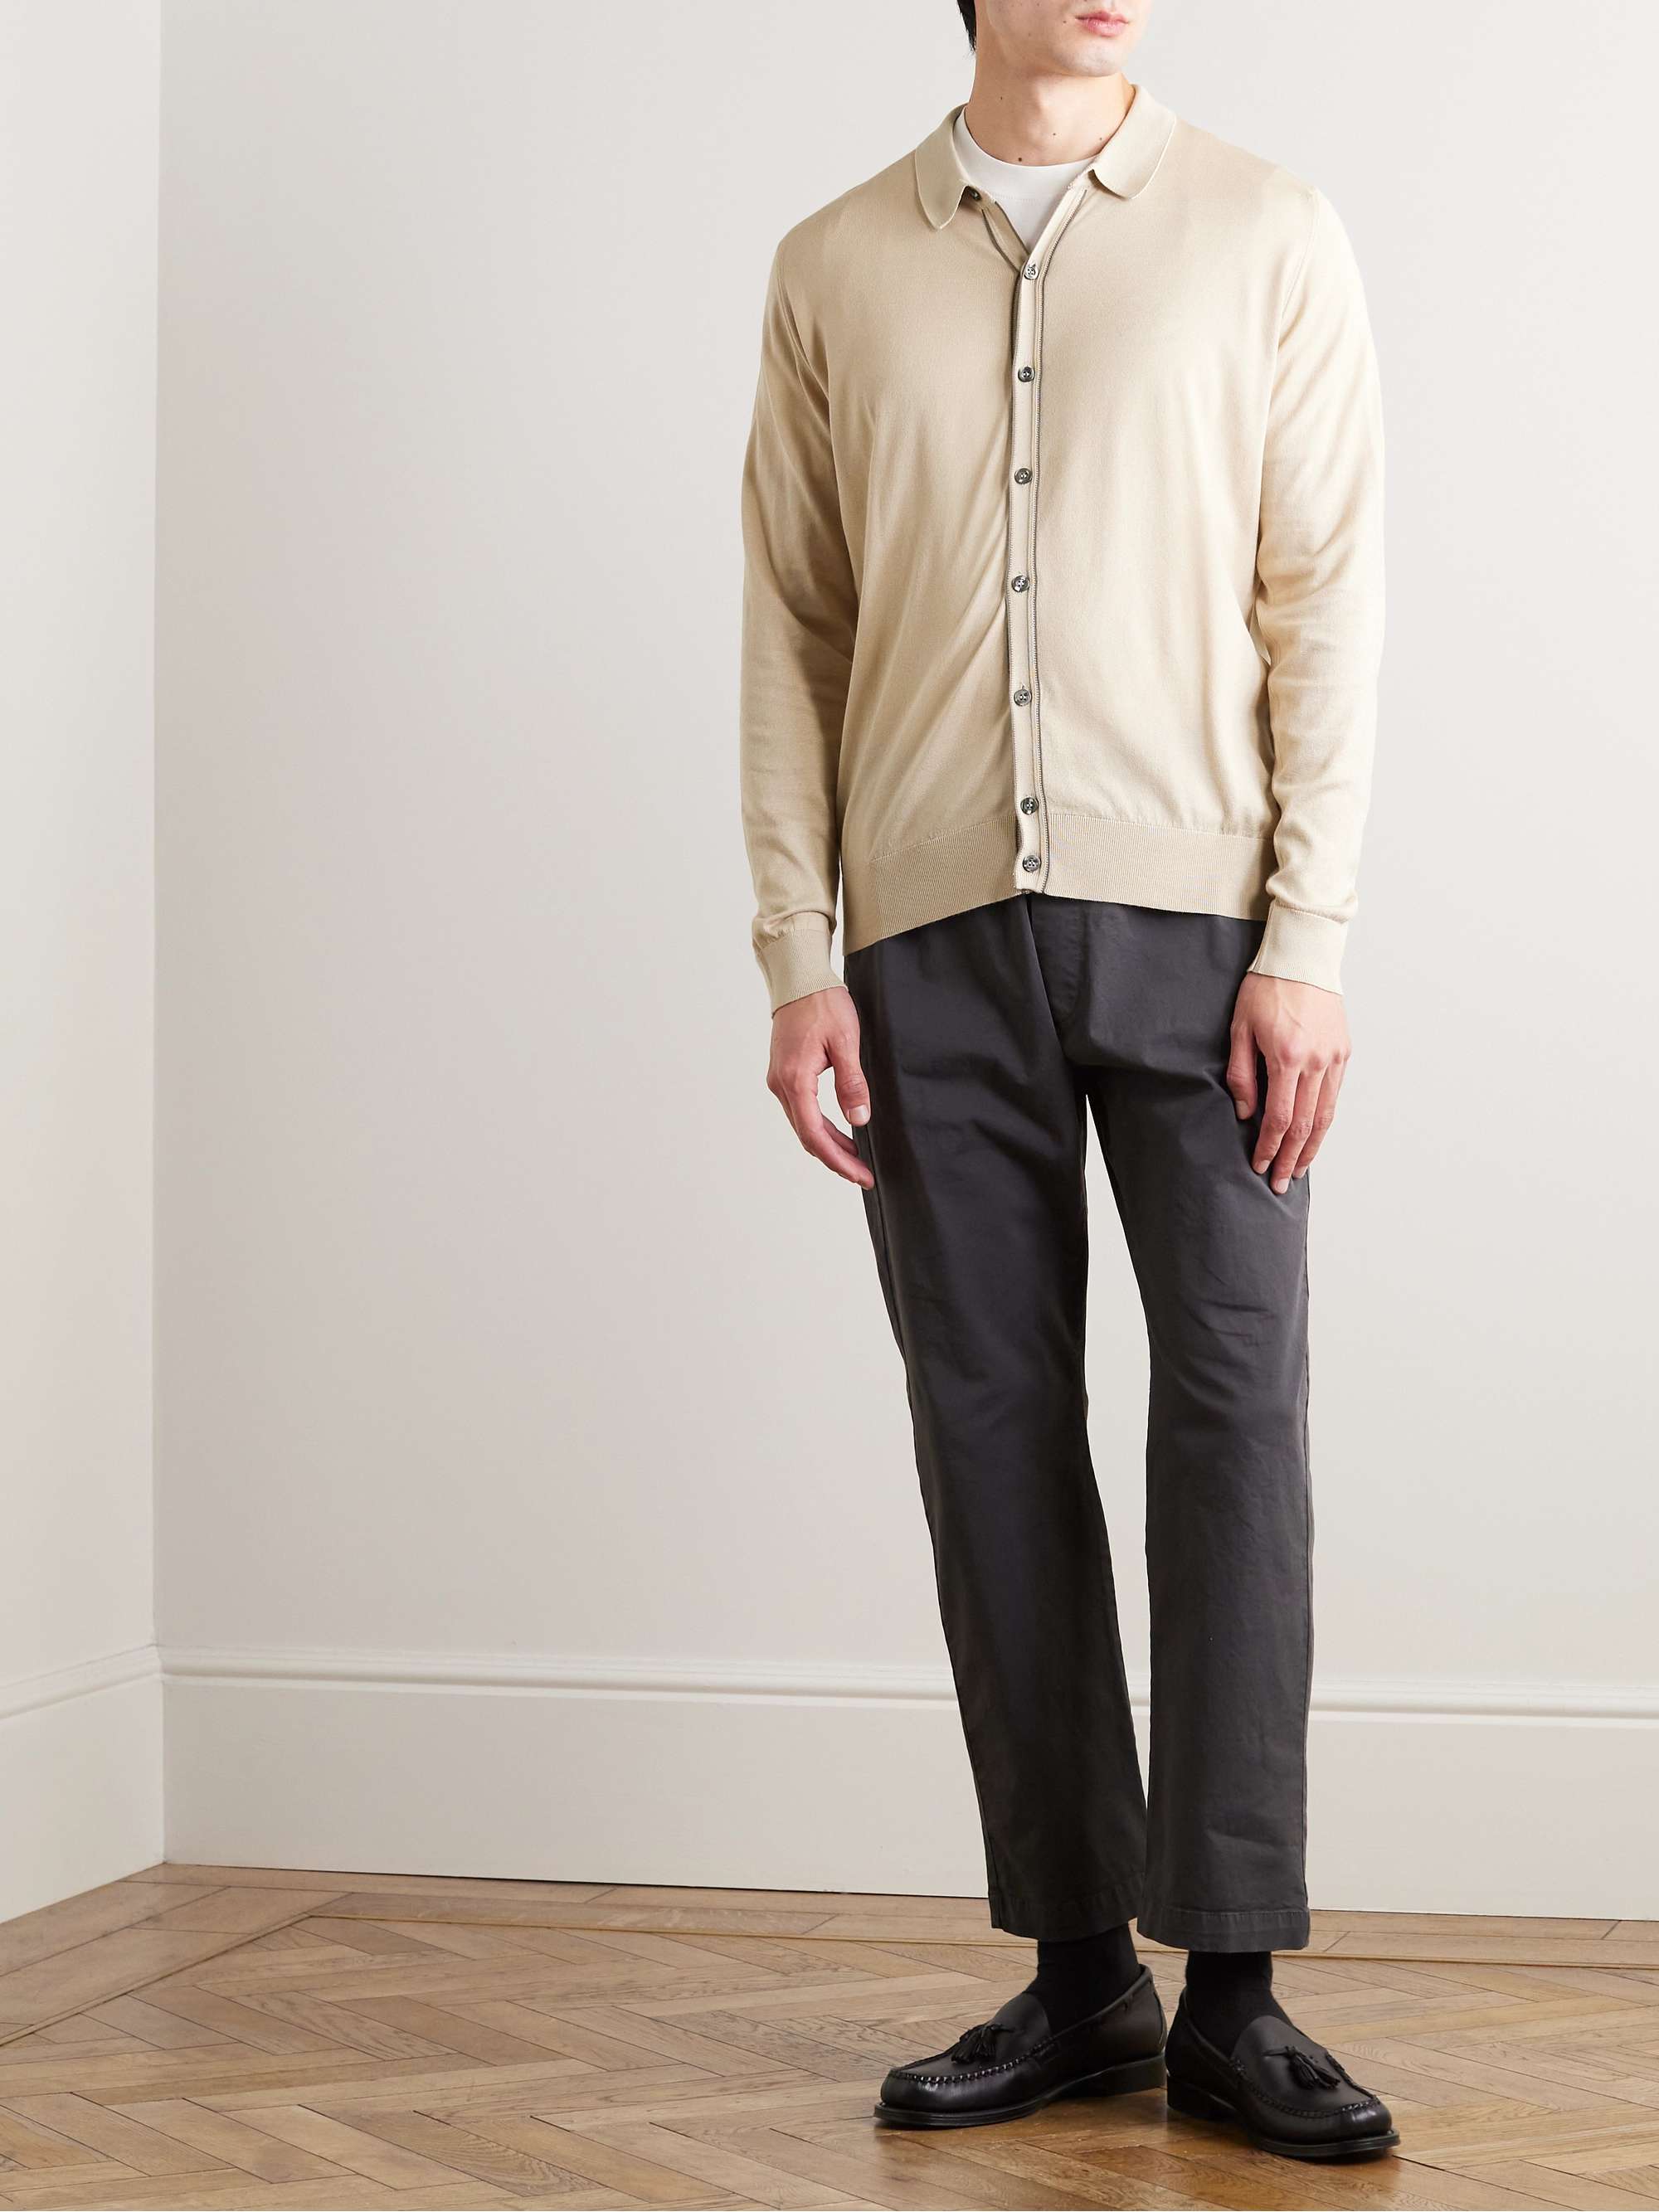 JOHN SMEDLEY Contrast-Tipped Sea Island Cotton Shirt for Men | MR PORTER